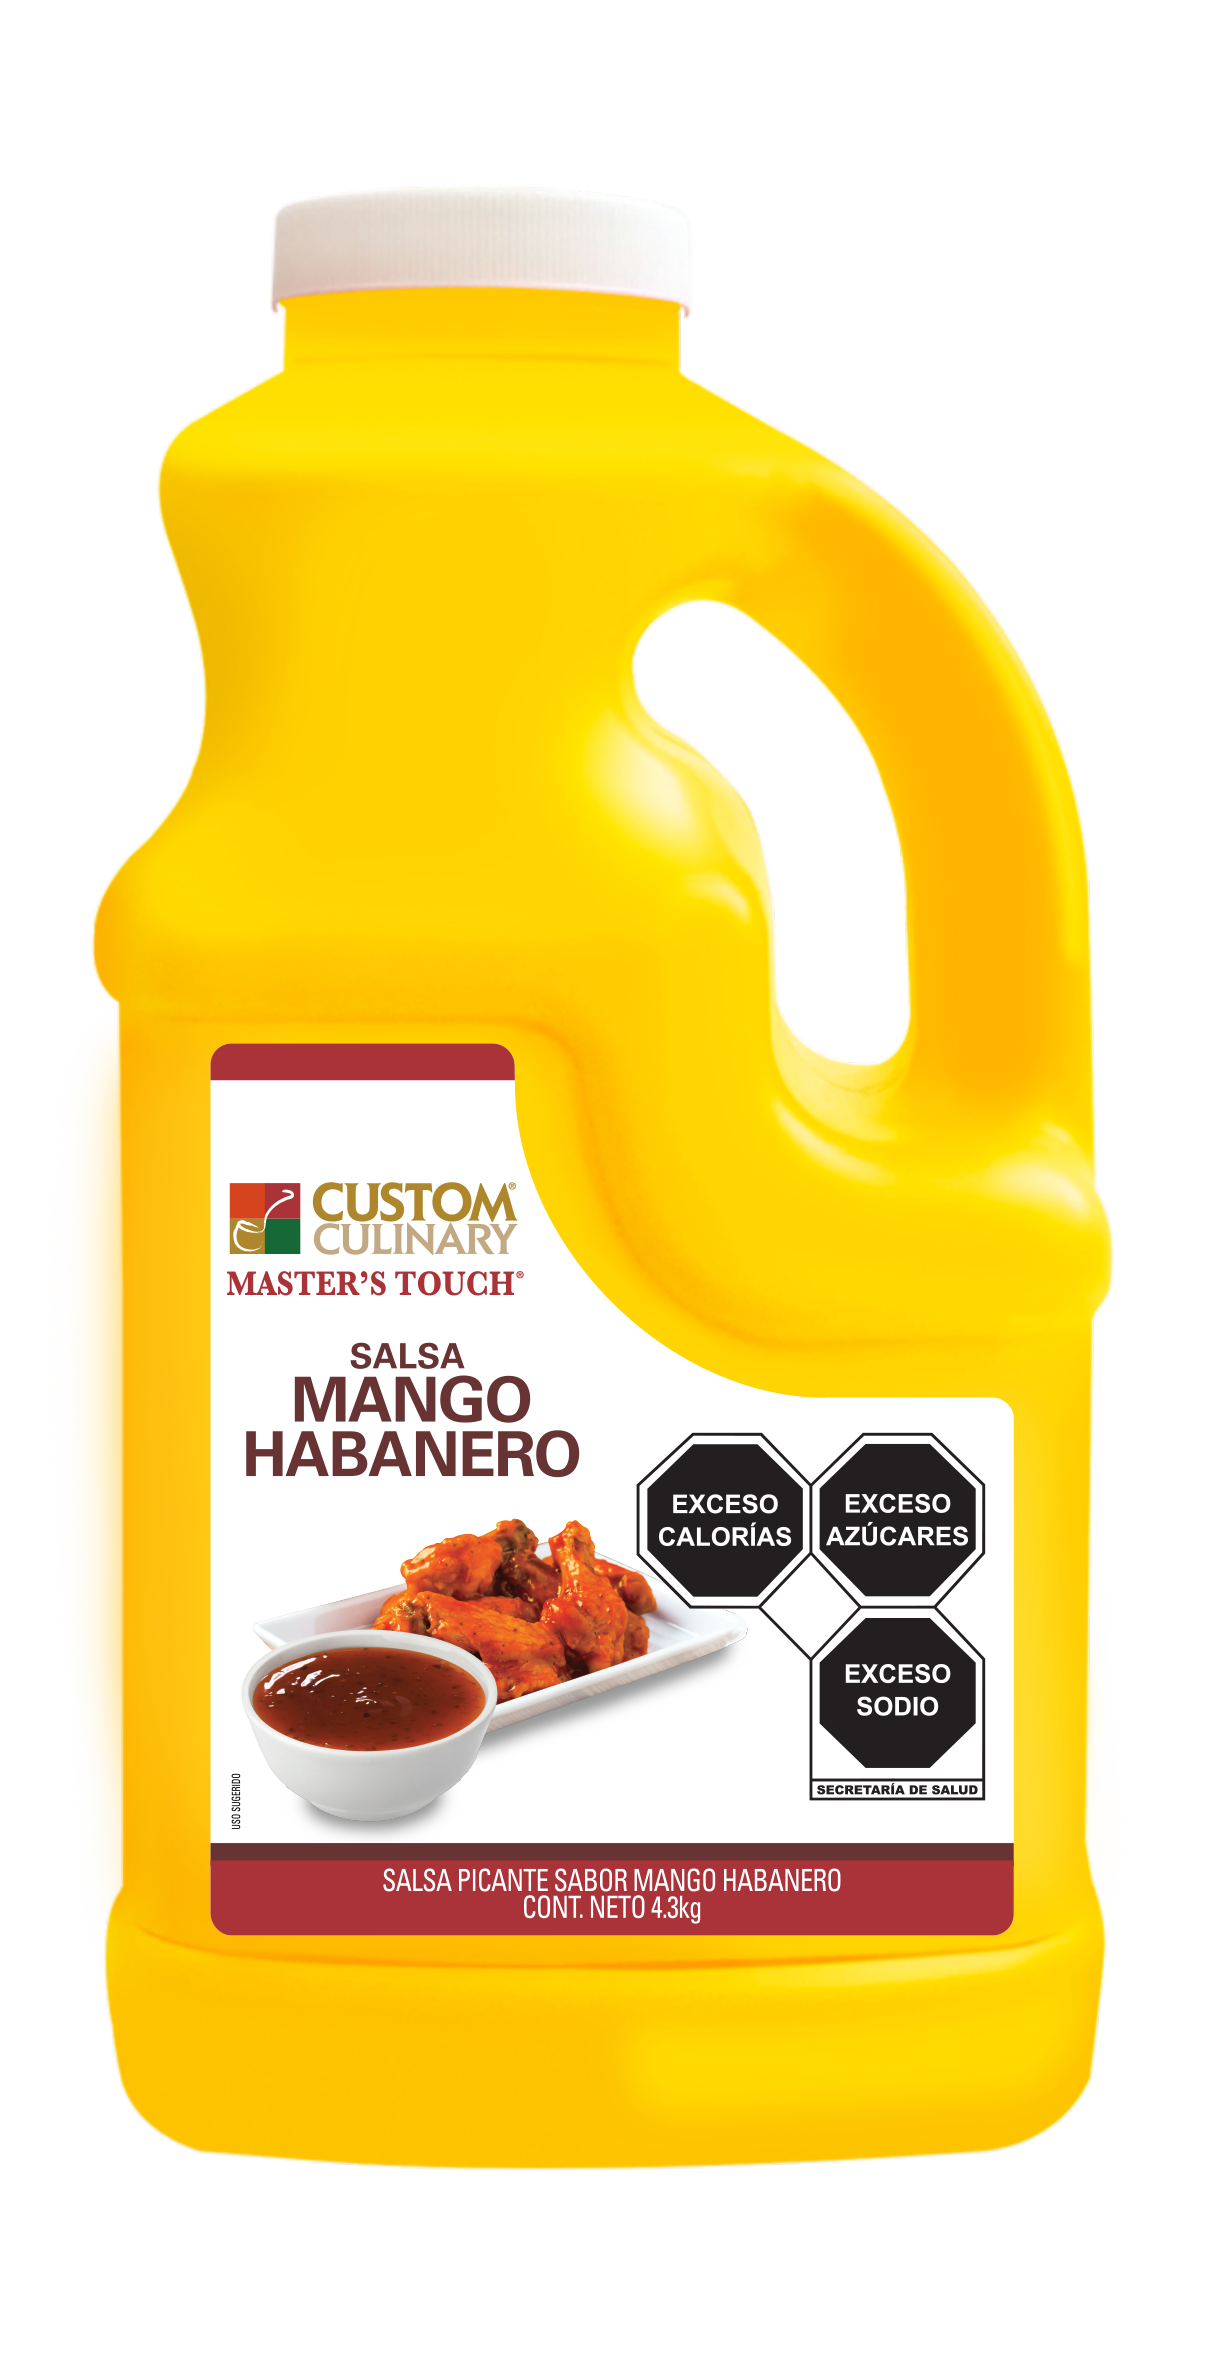 Arriba 89+ imagen salsa mango habanero para alitas